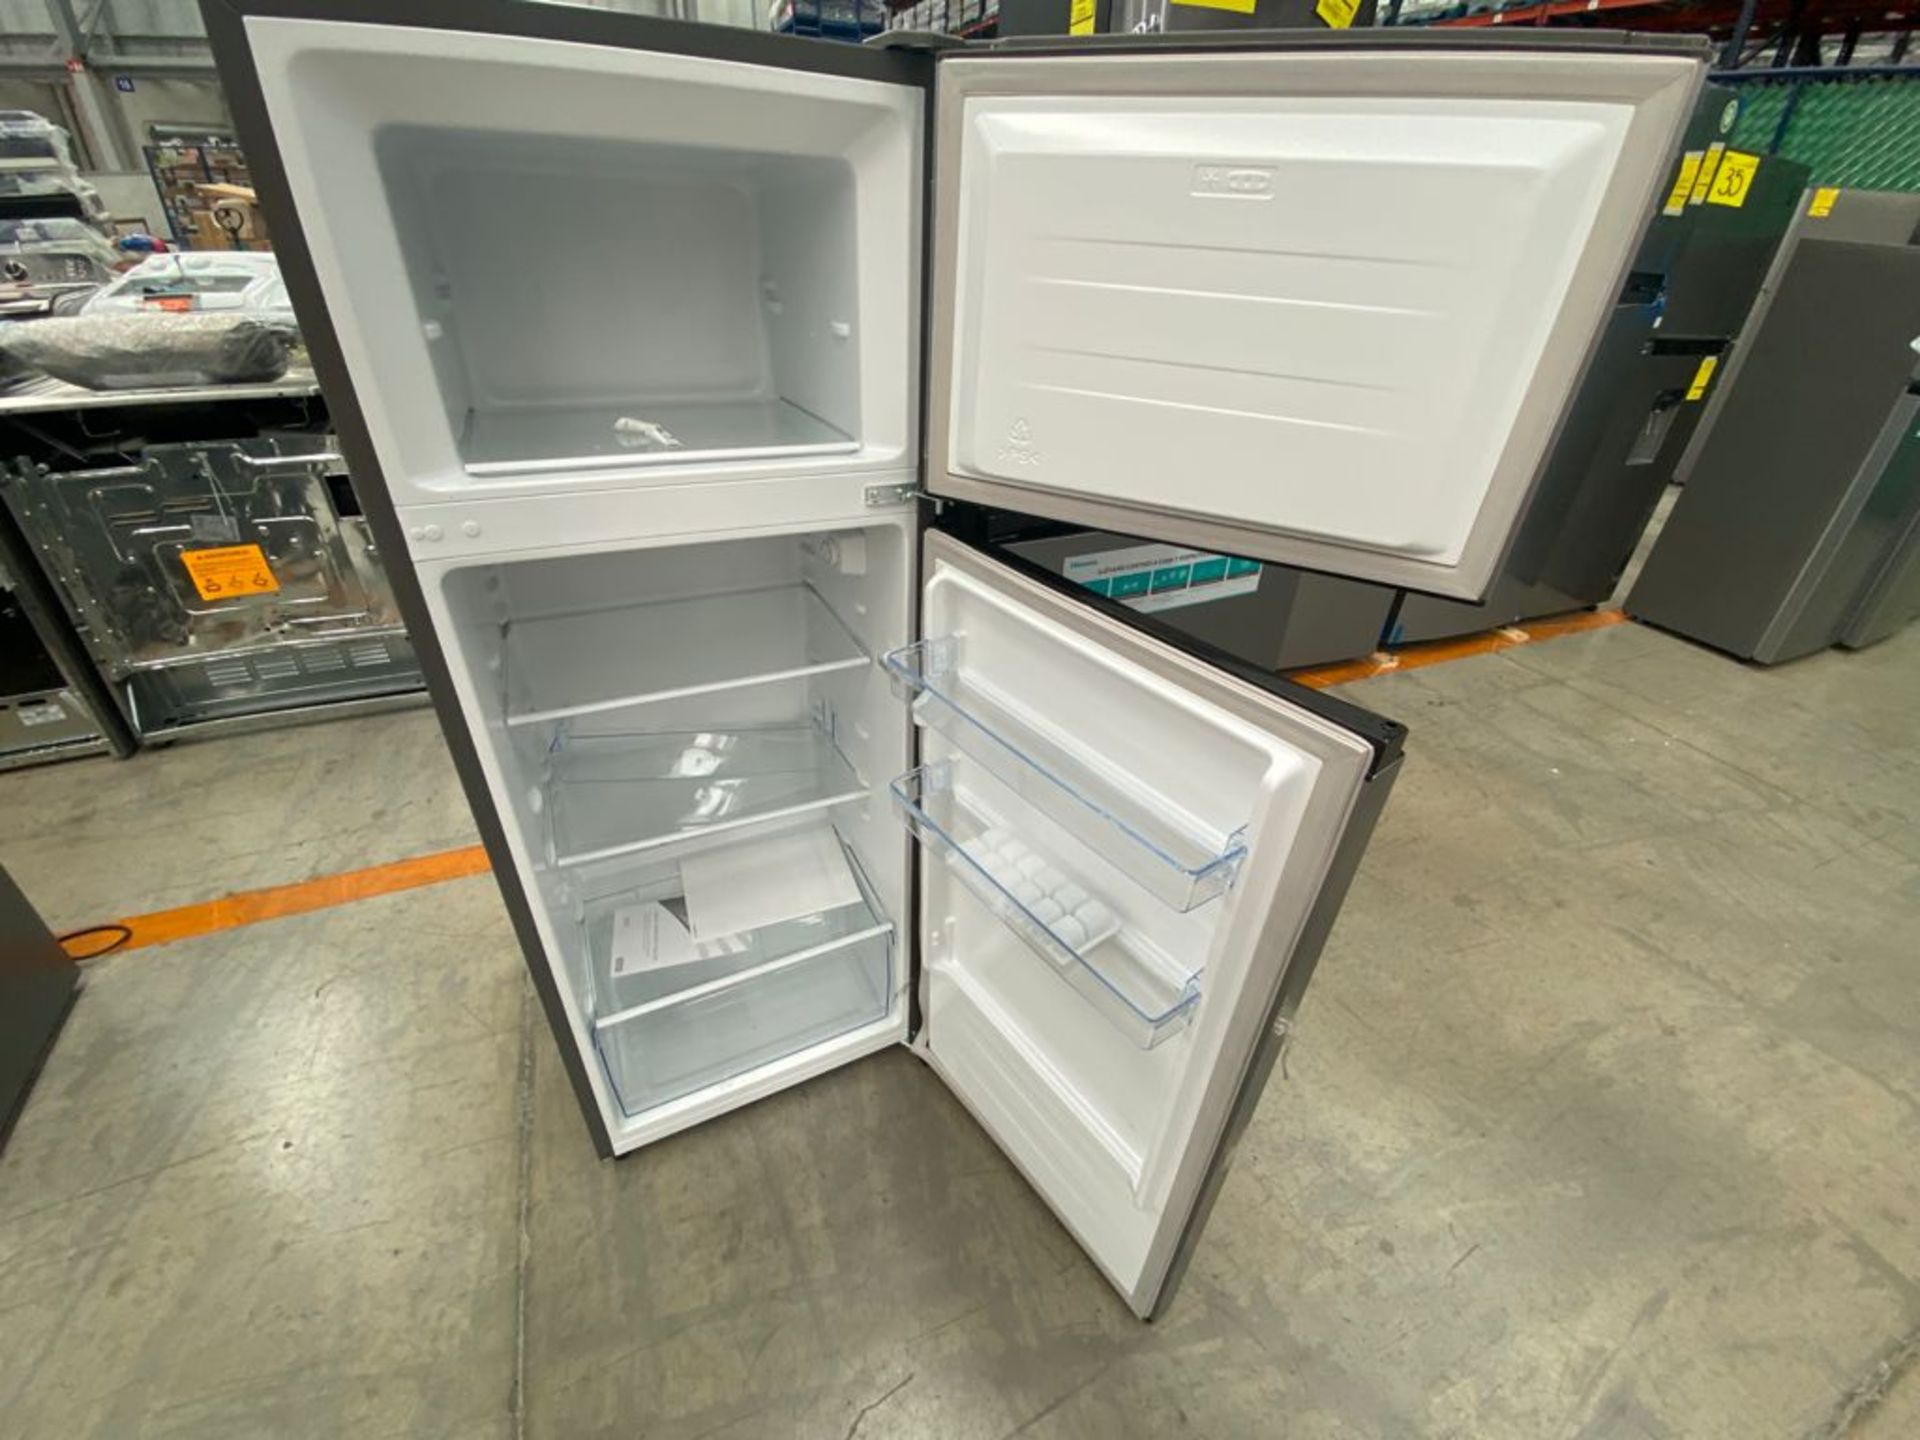 2 Refrigeradores marca Hisense color gris modelo RT80D6AWX - Image 14 of 28